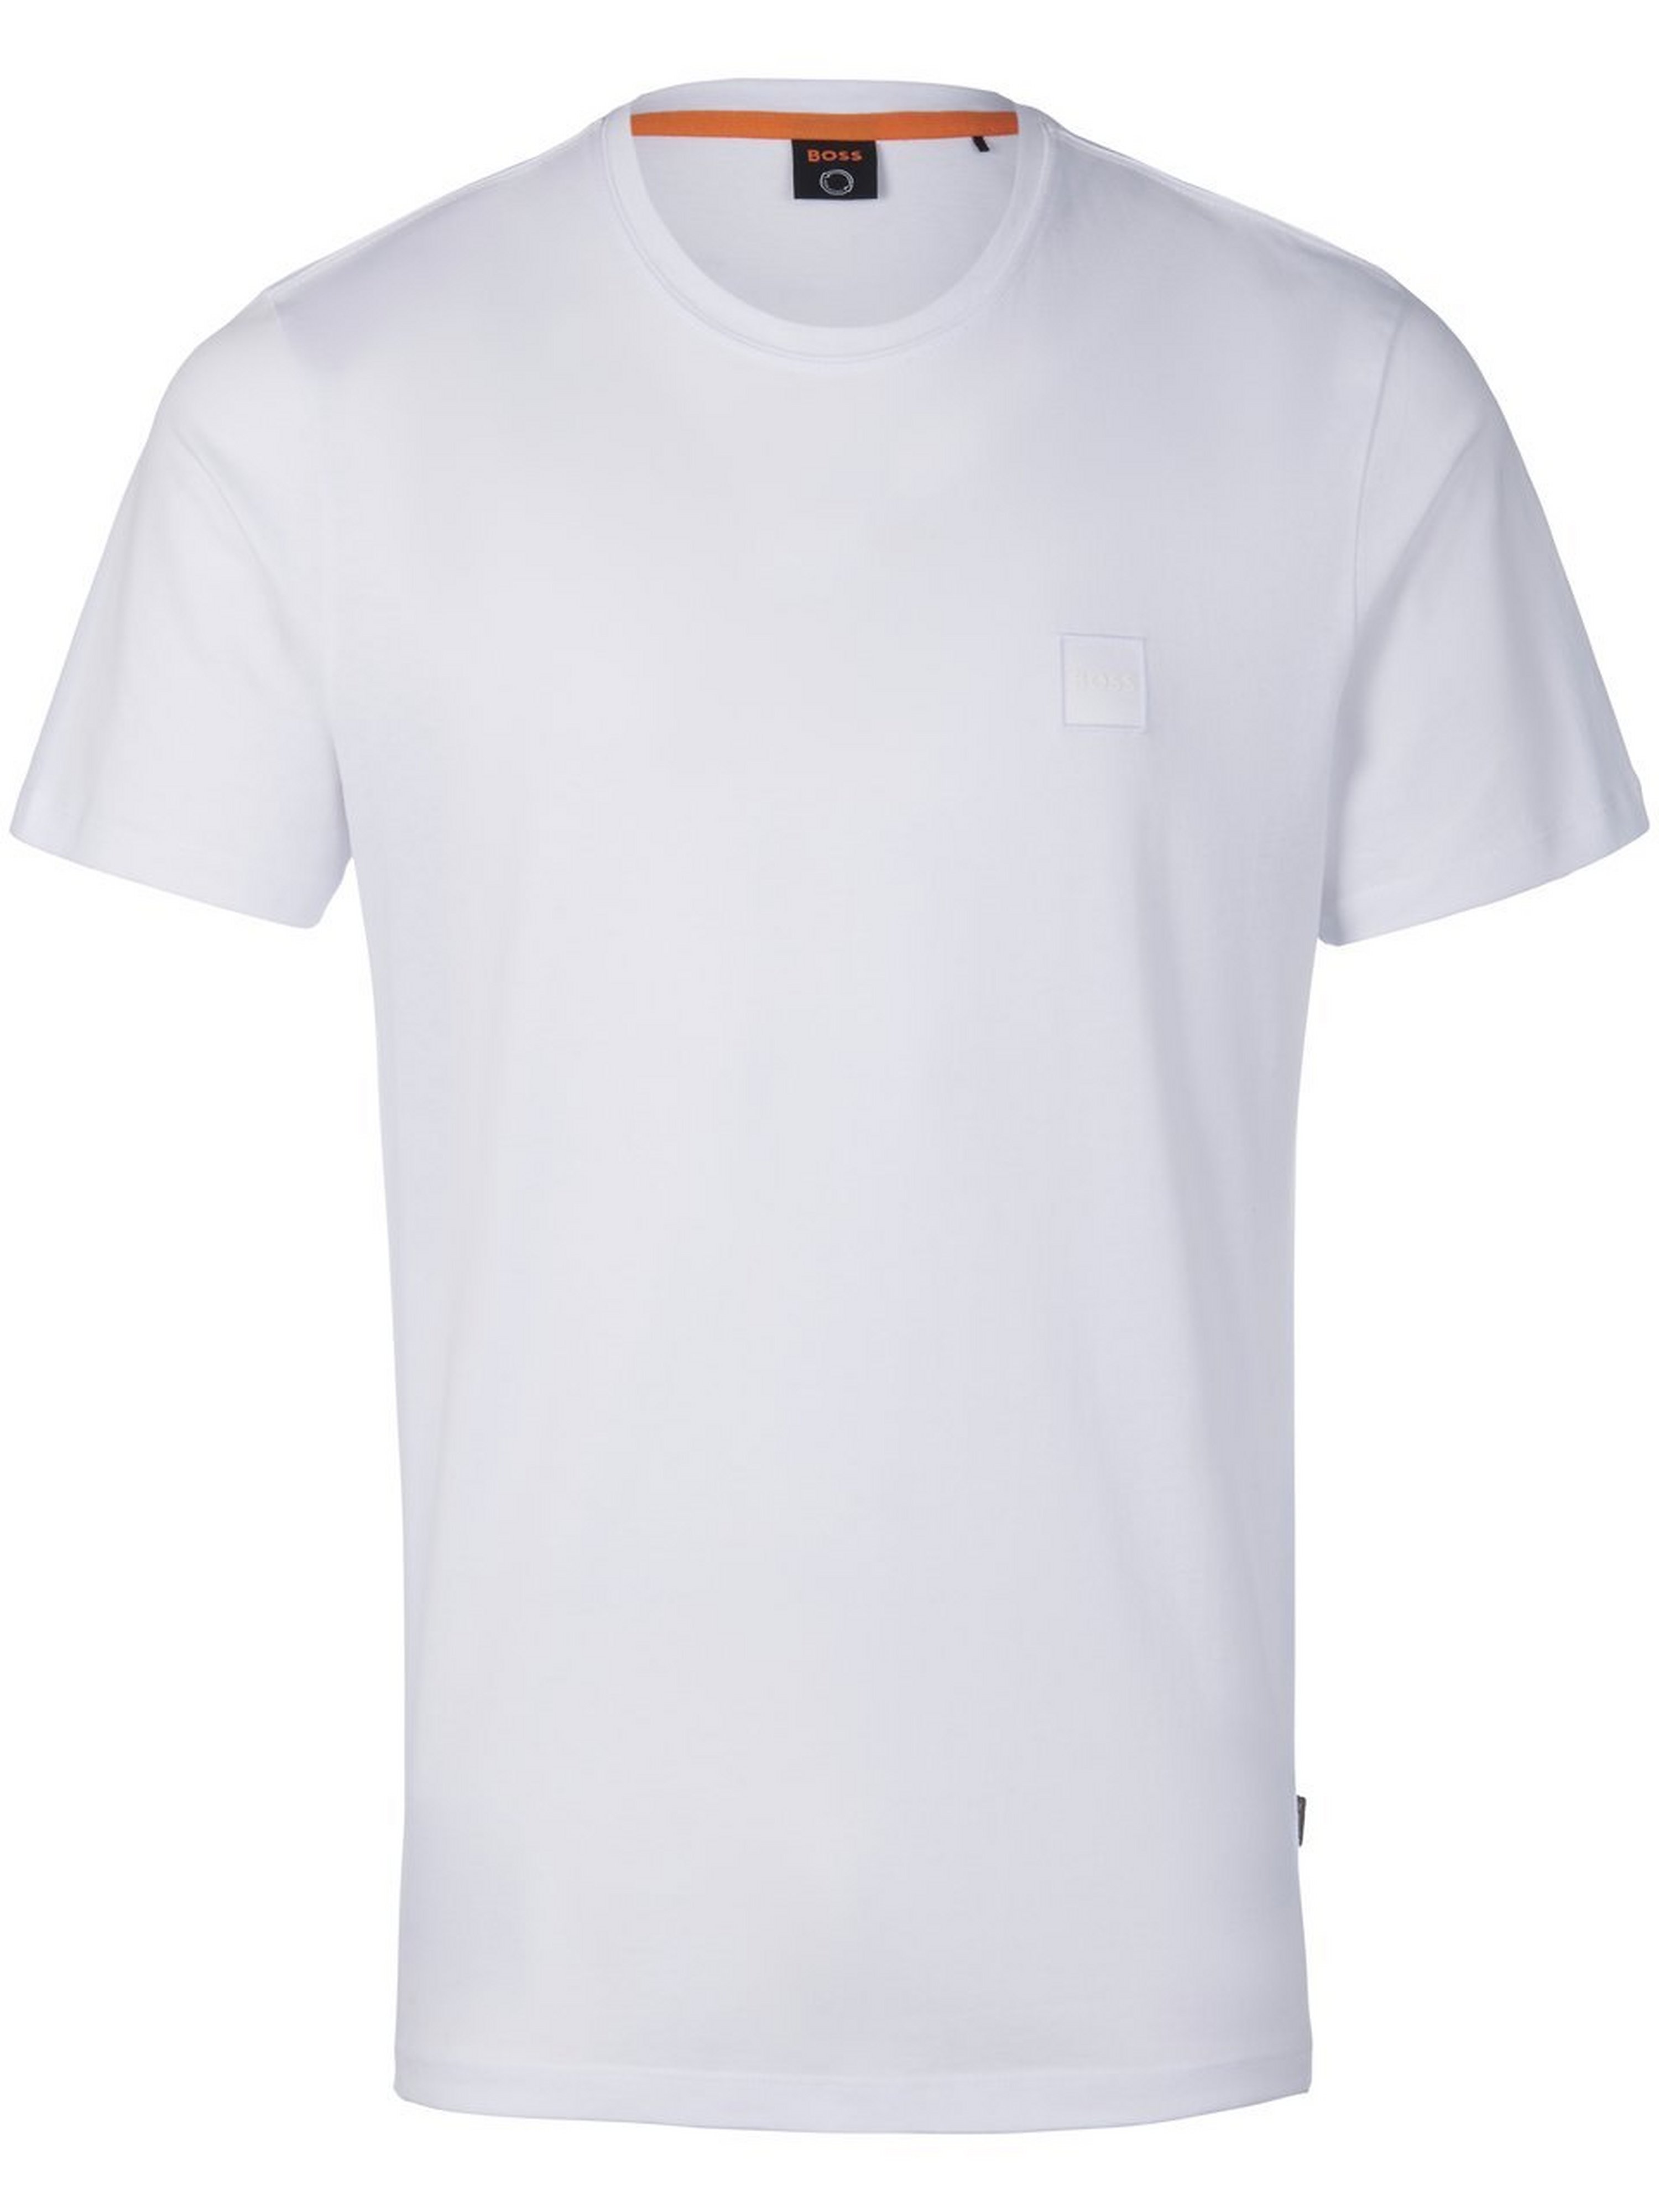 Le T-shirt 100% coton  BOSS blanc taille 58